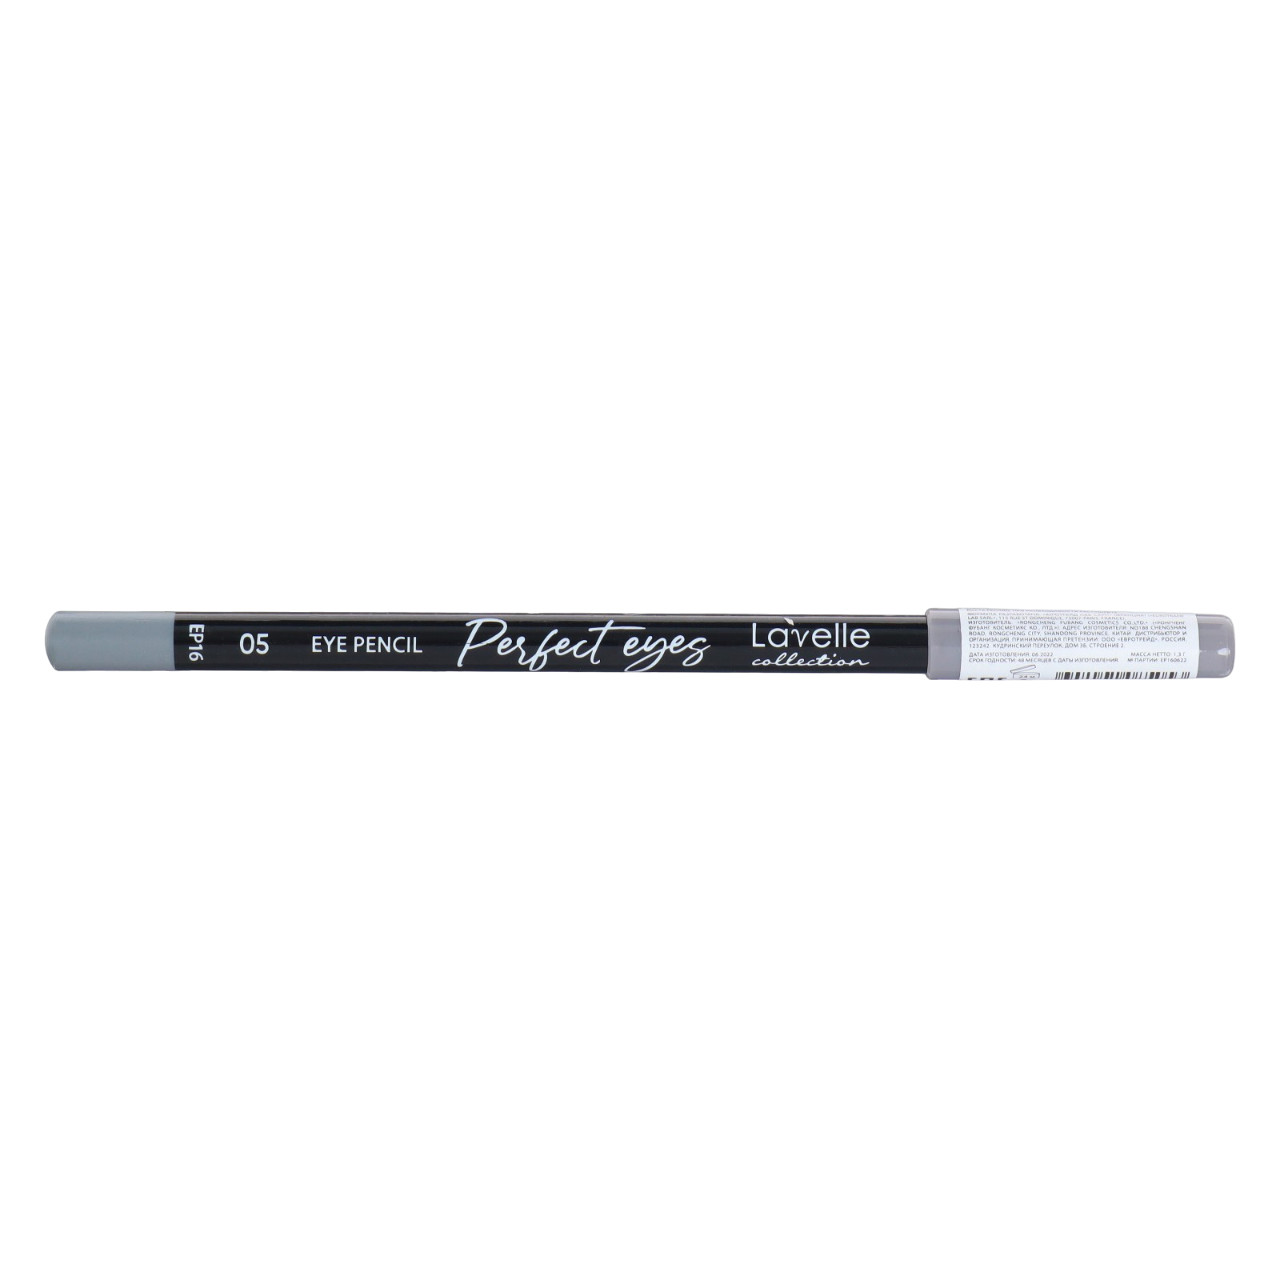 lavelle collection косметический карандаш для глаз ep17 Карандаш для глаз косметический LavelleCollection EP16 тон 05 серебристый, 5 г